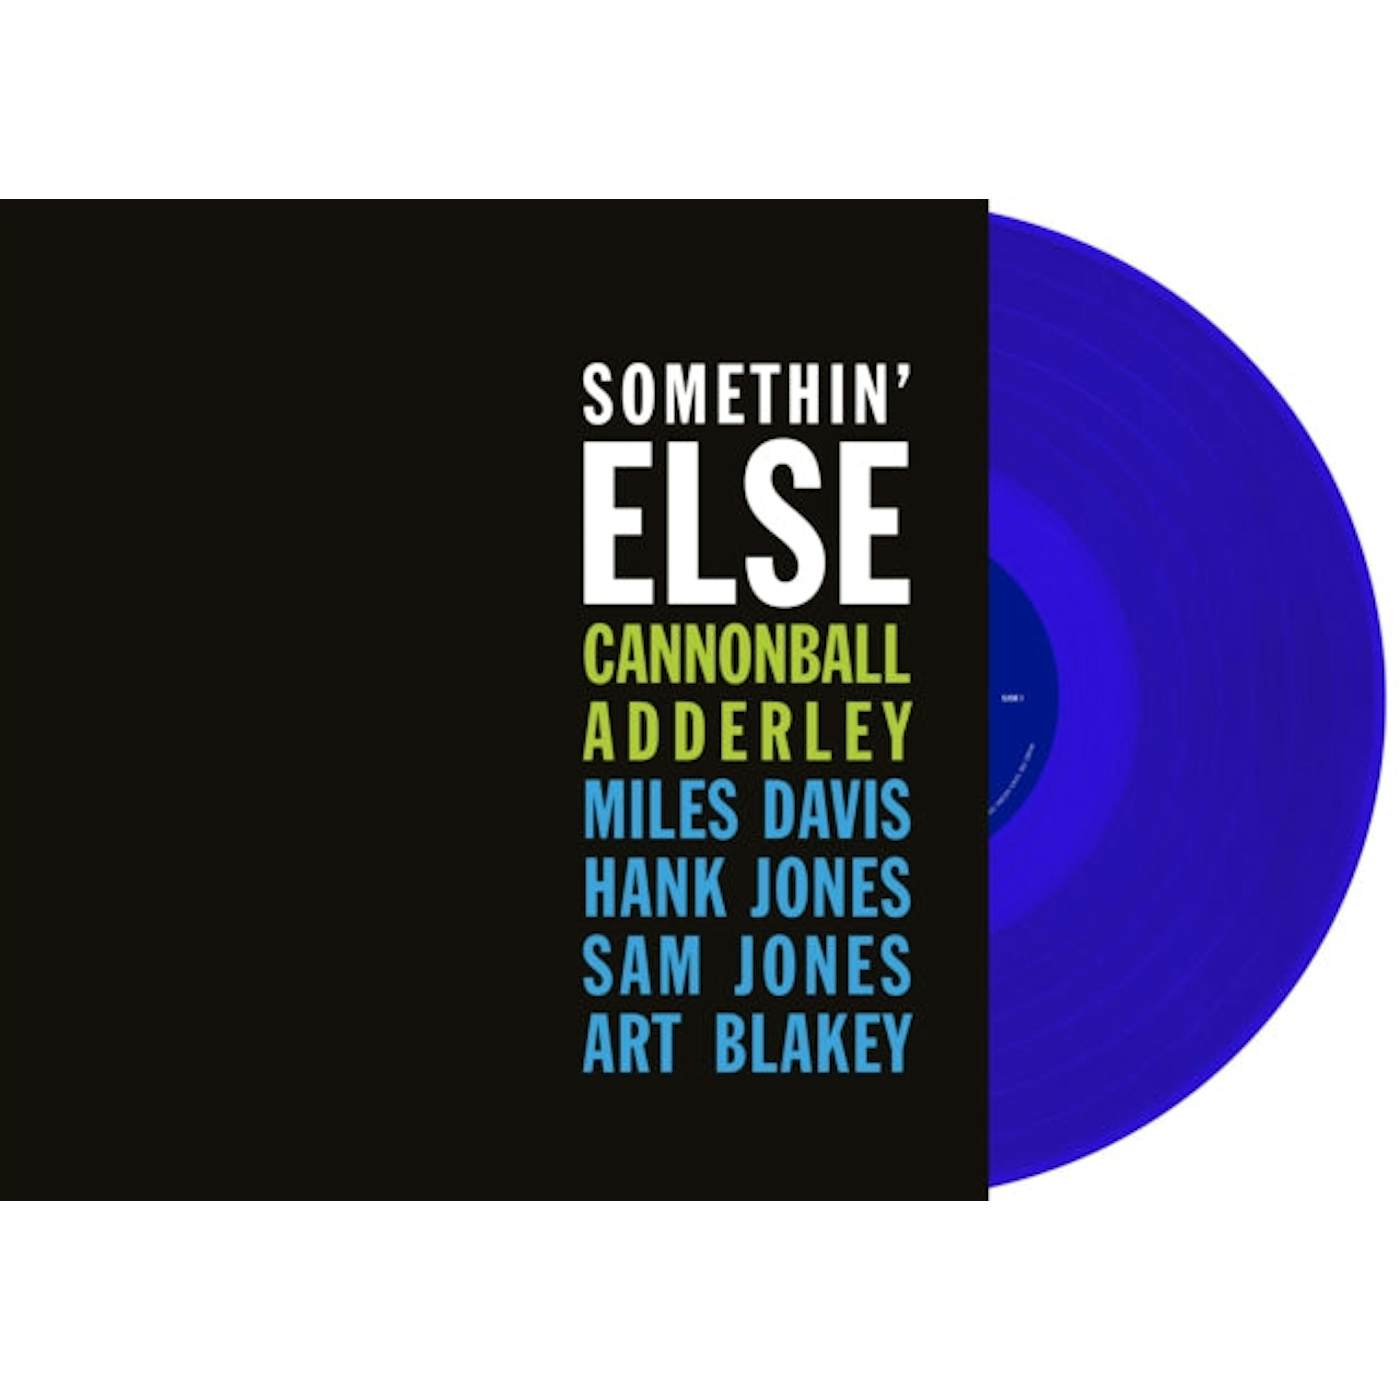 Cannonball Adderley LP Vinyl Record - Somethin' Else (Blue Vinyl)